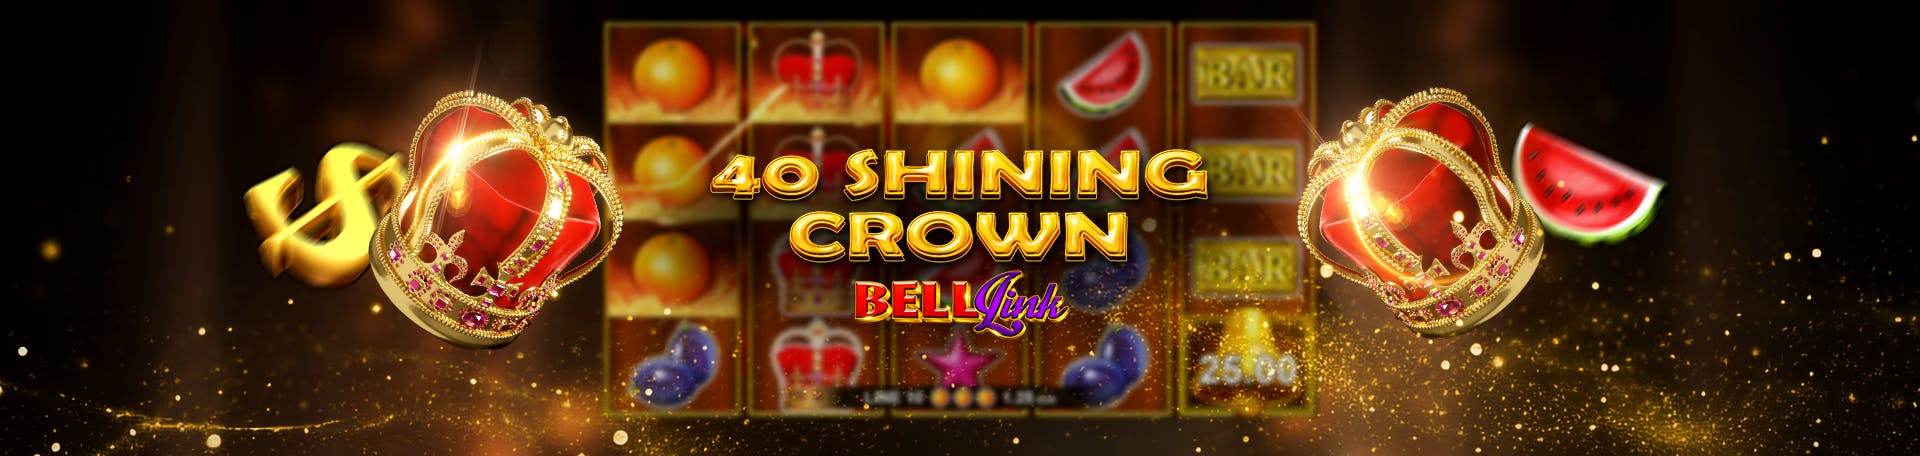 40 Shining CrownvBell Link logo